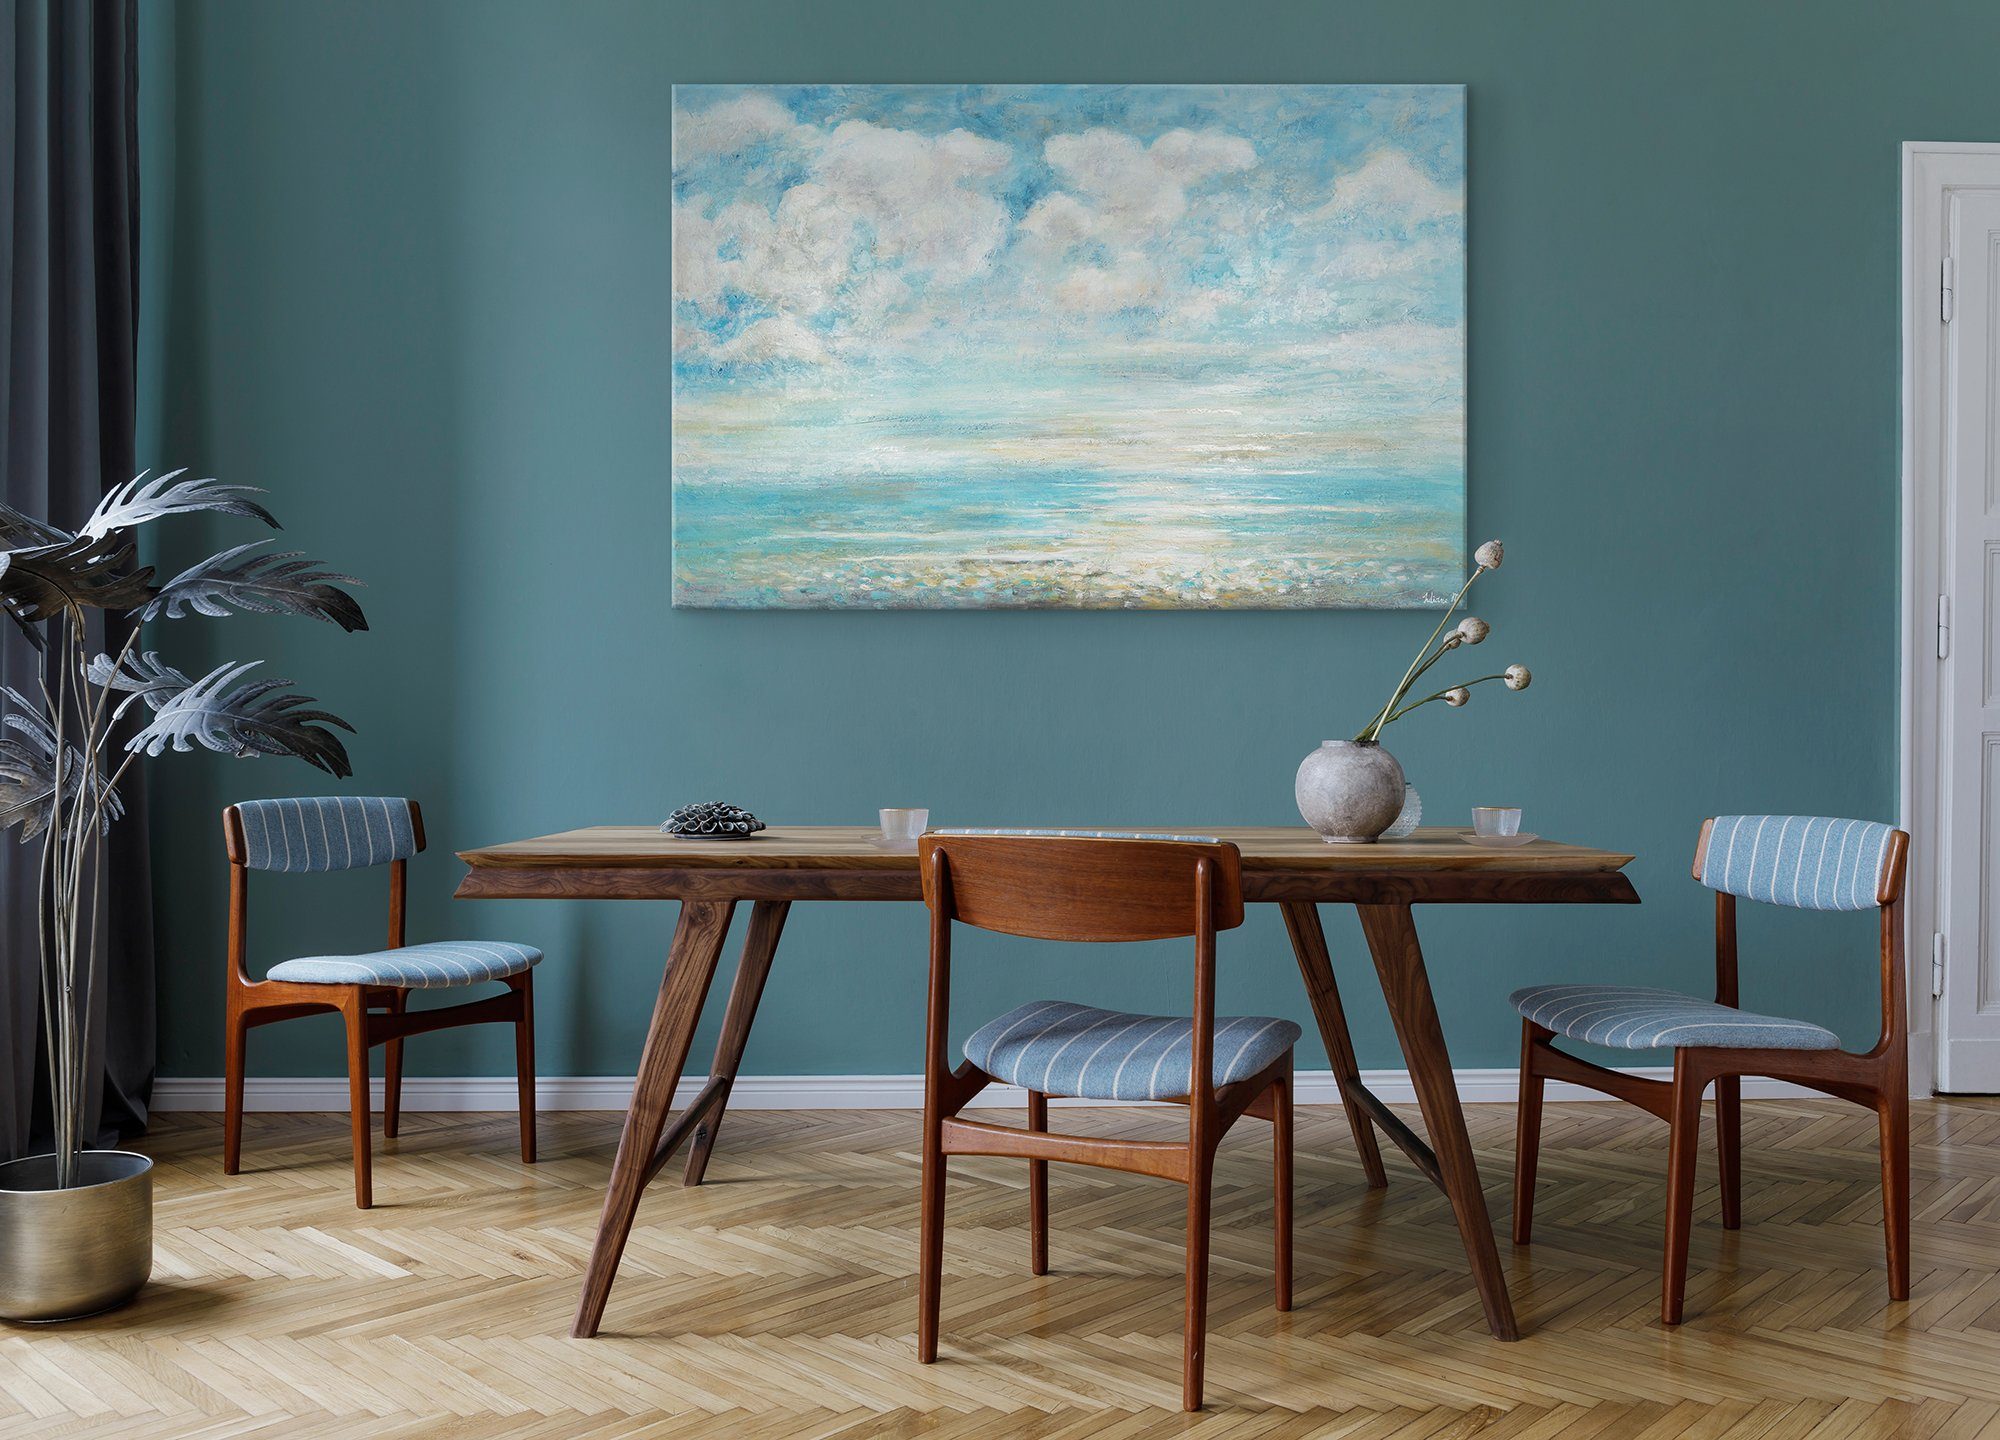 YS-Art Gemälde Abkühlung, Landschaft, Handgemalt Leinwand Sonne Meereslandschaft Ohne Meer Schattenfugenrahmen Strand Bild